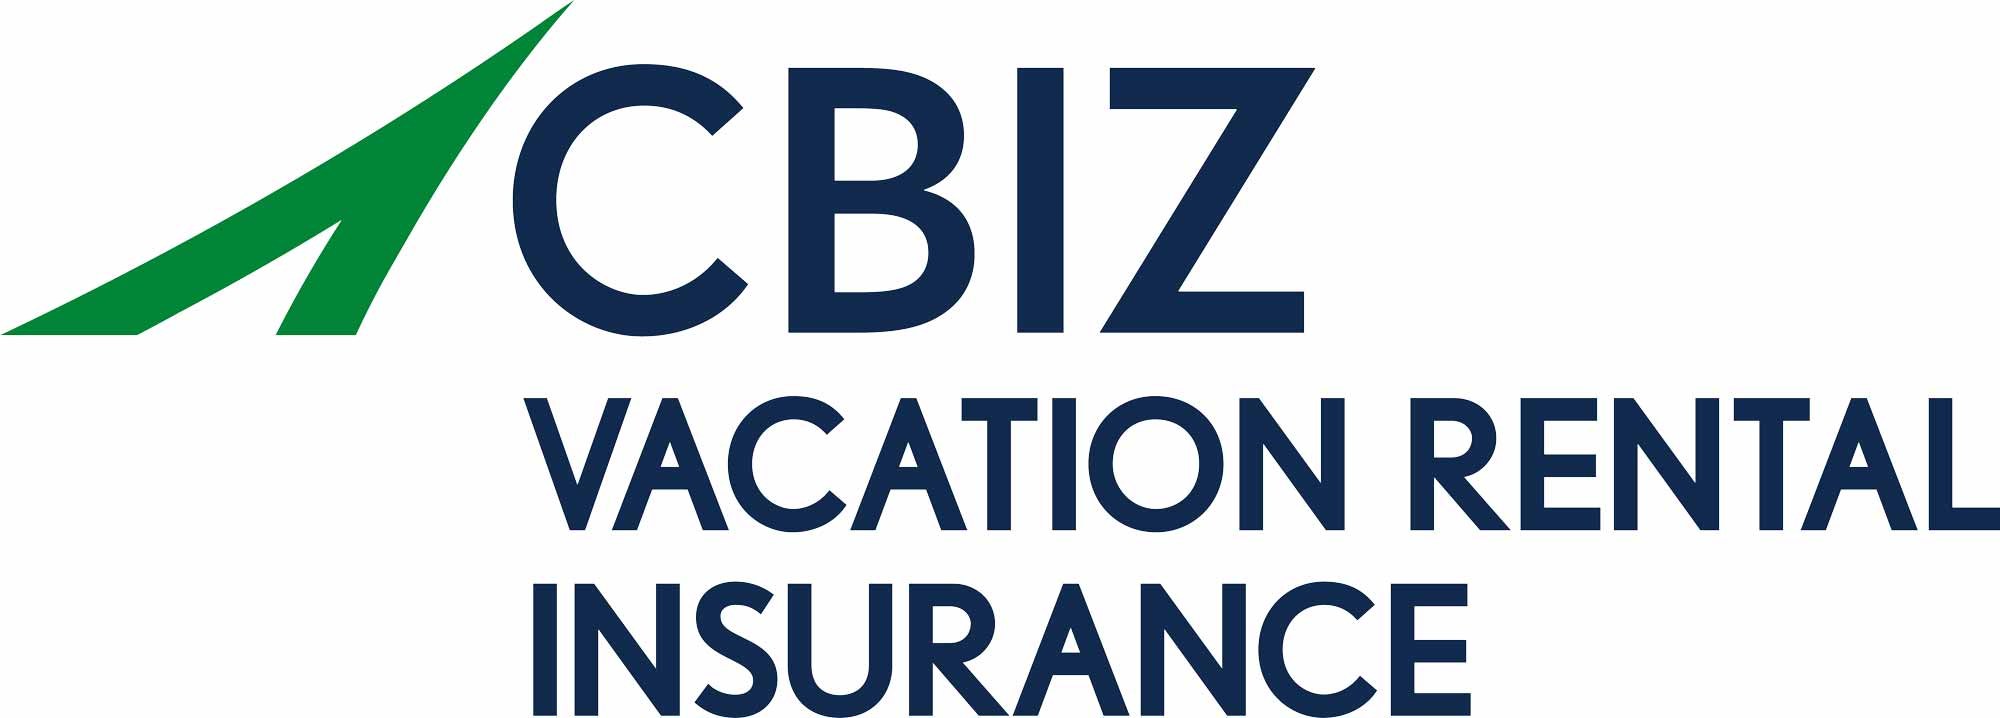 CBIZ-Vacation-Rental-Insurance-2C